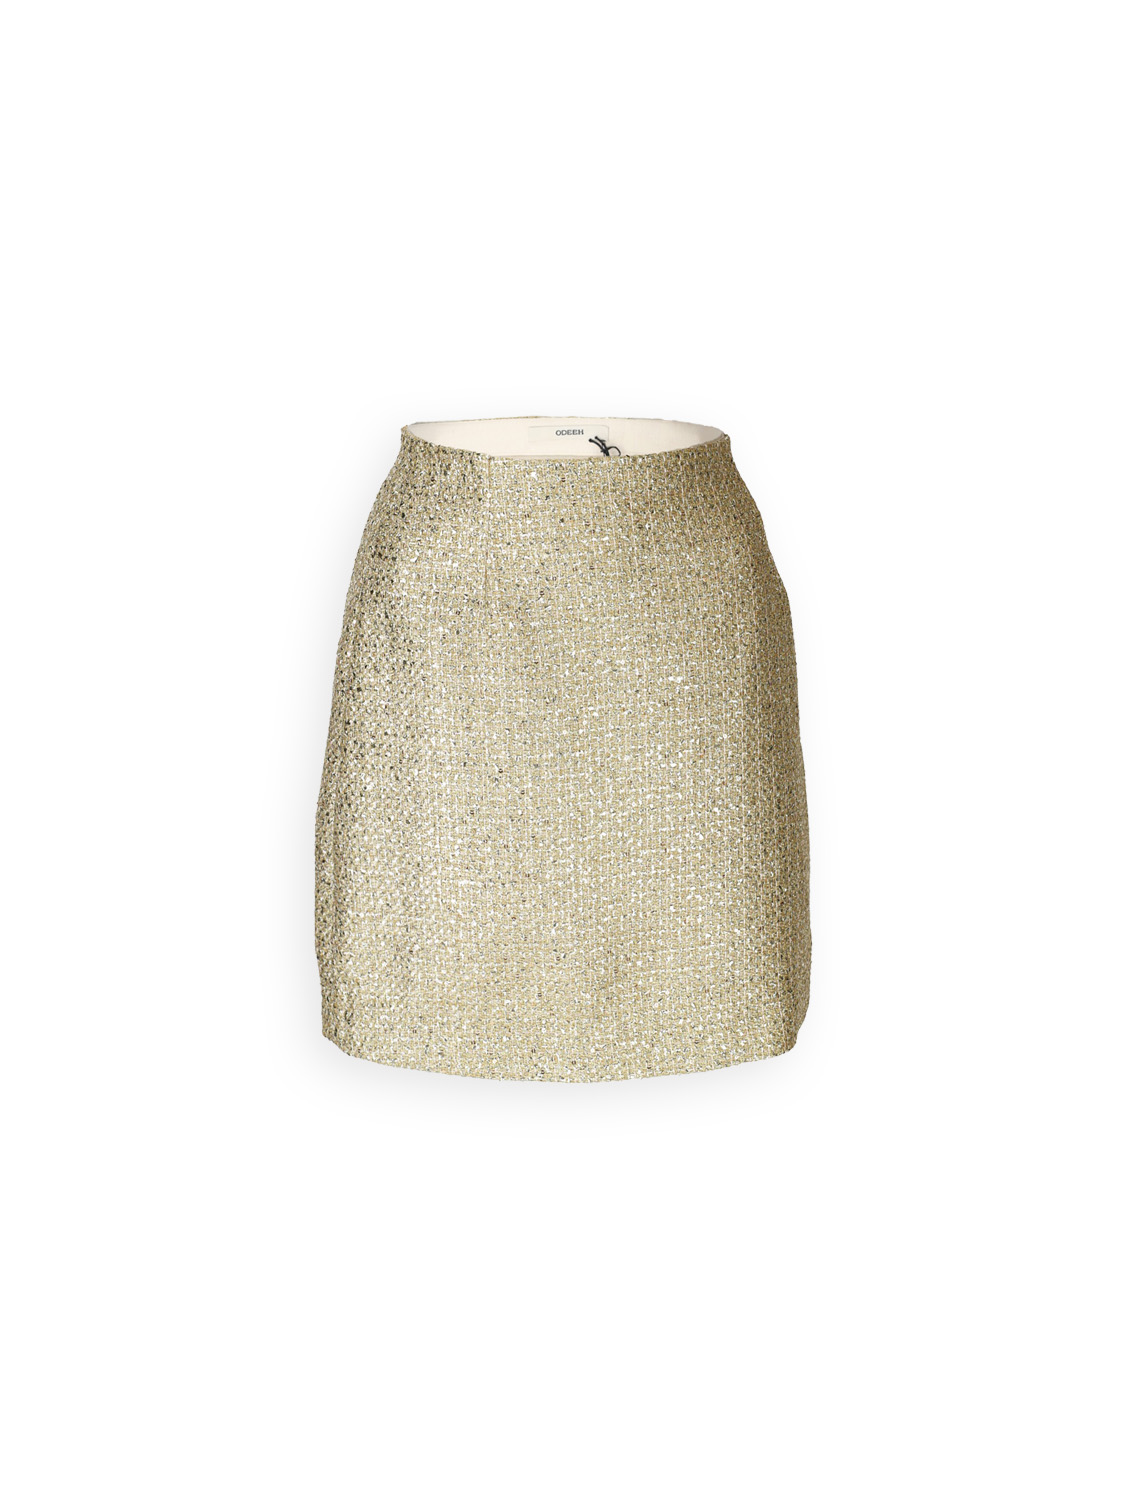 Gold Brocade - Brocade mini skirt with lurex details 